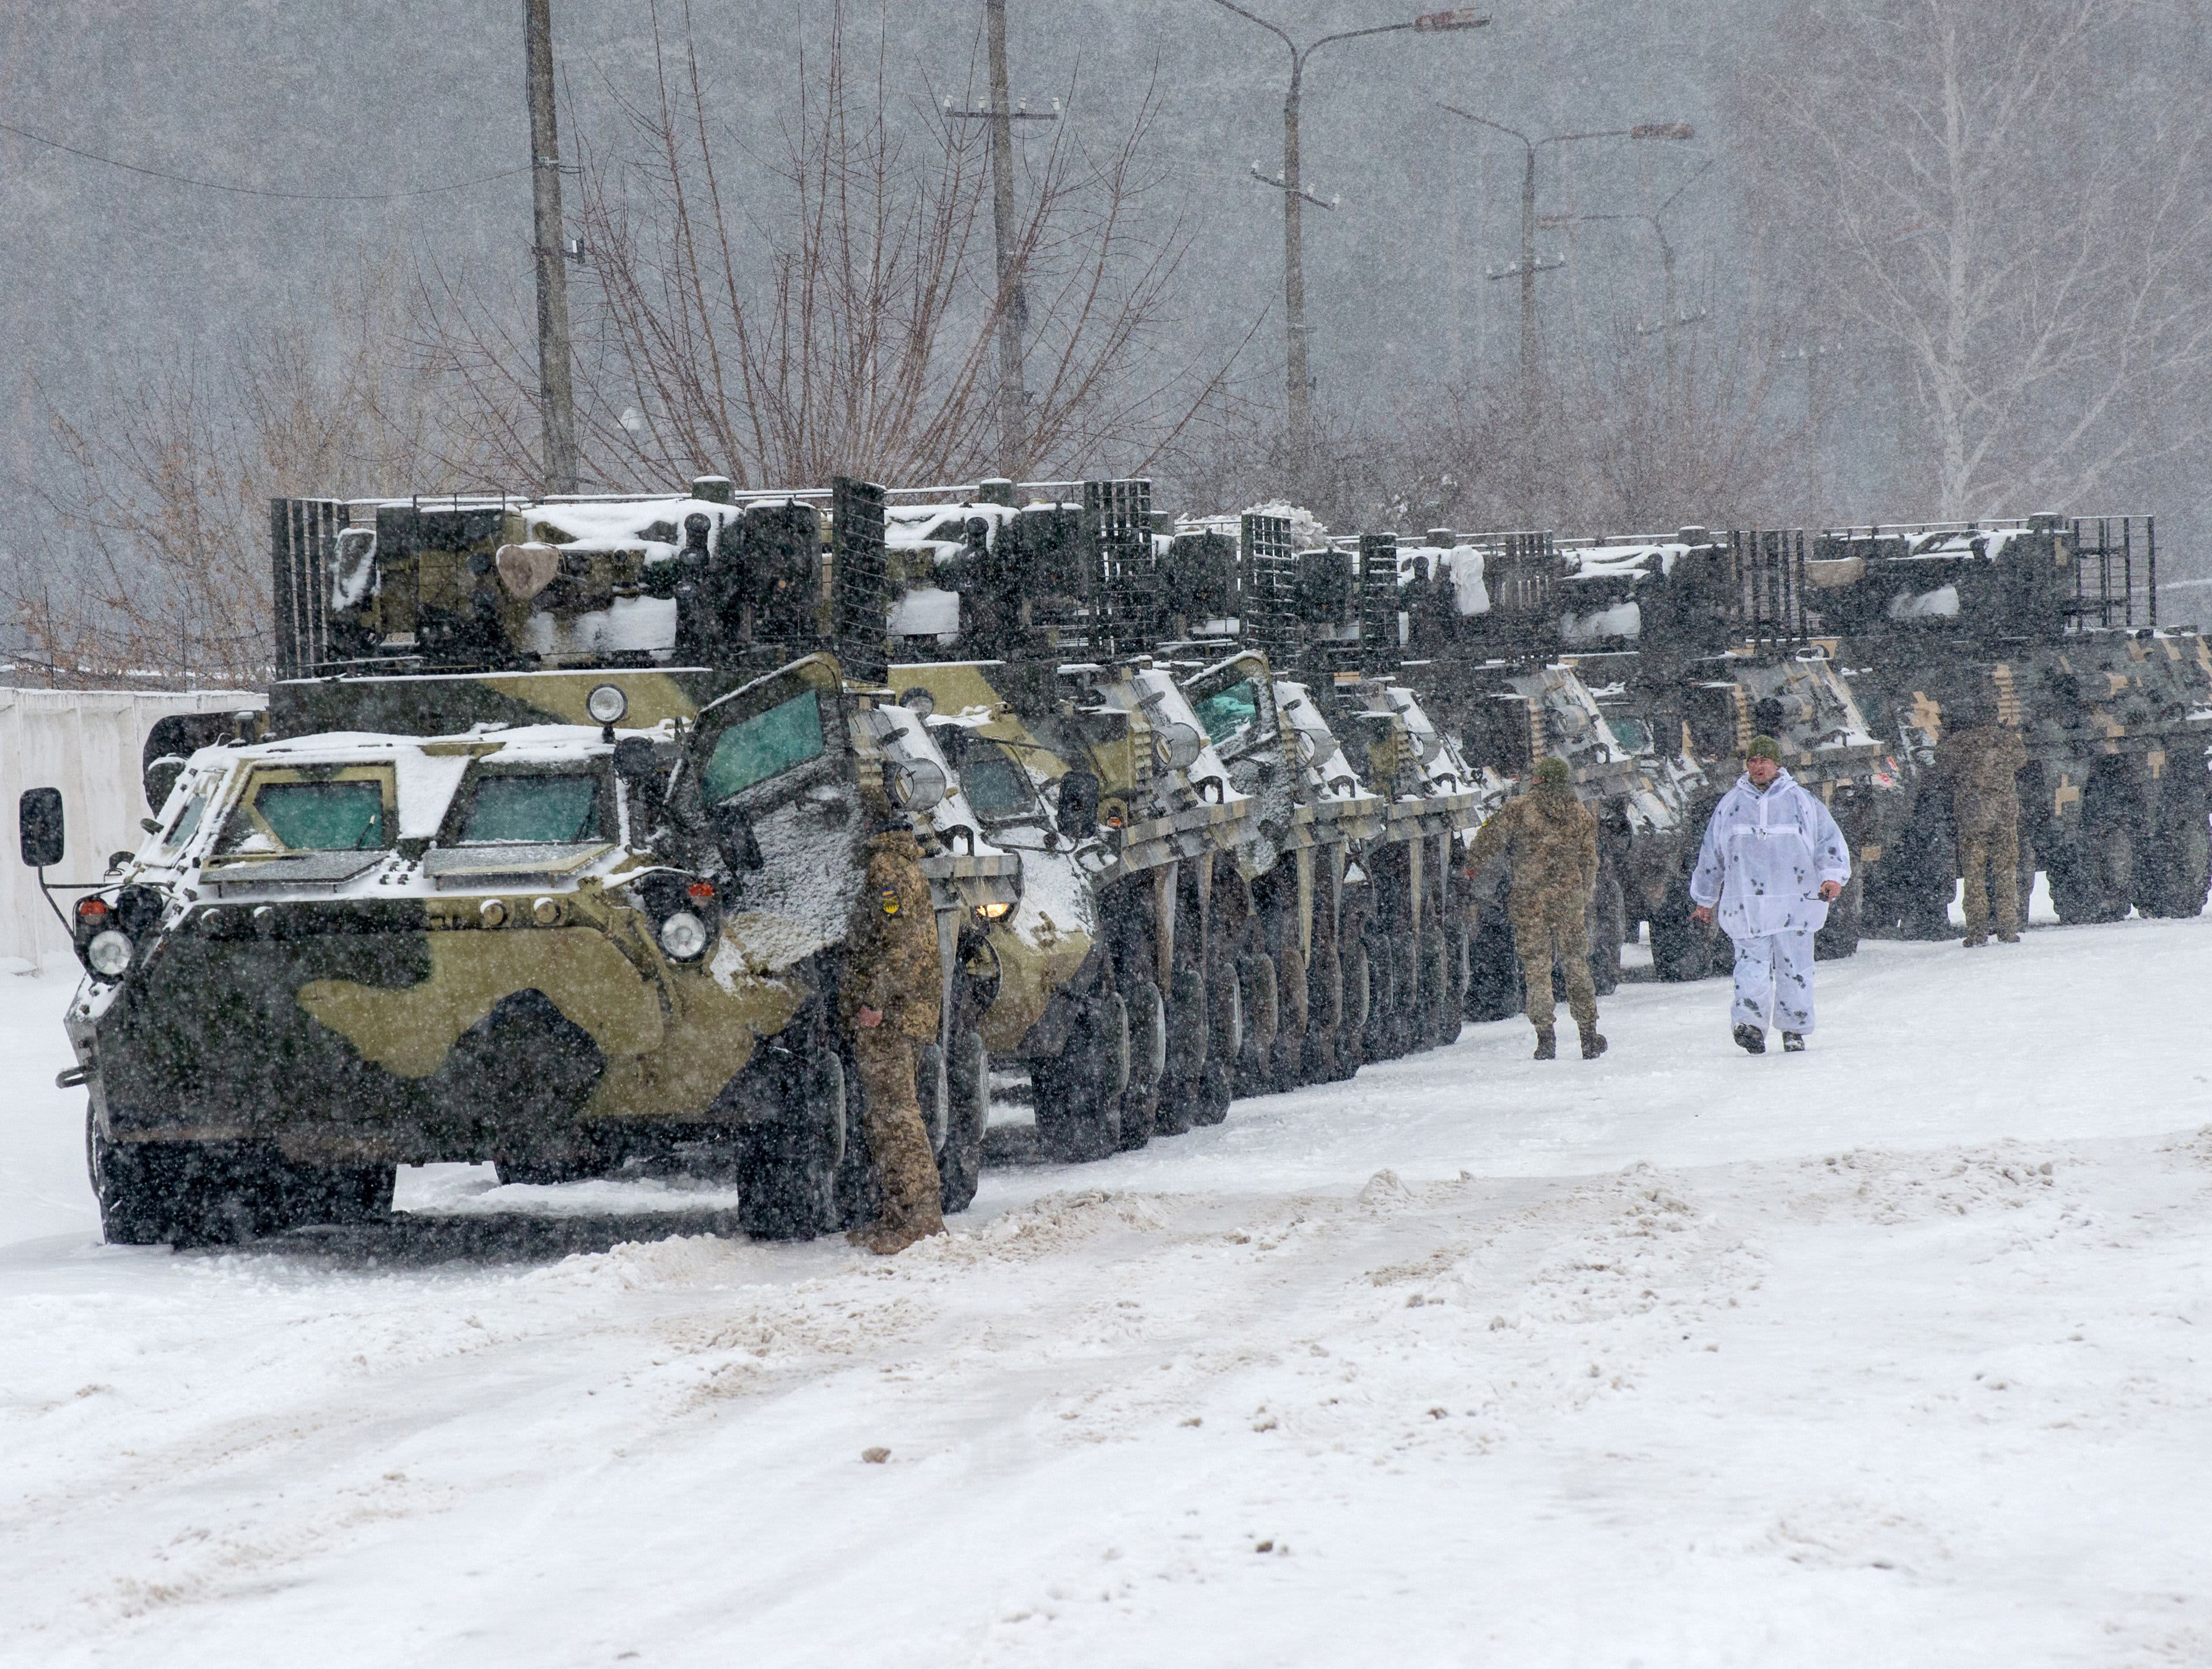 Russia's invasion of Ukraine may pressure light-vehicle sales growth